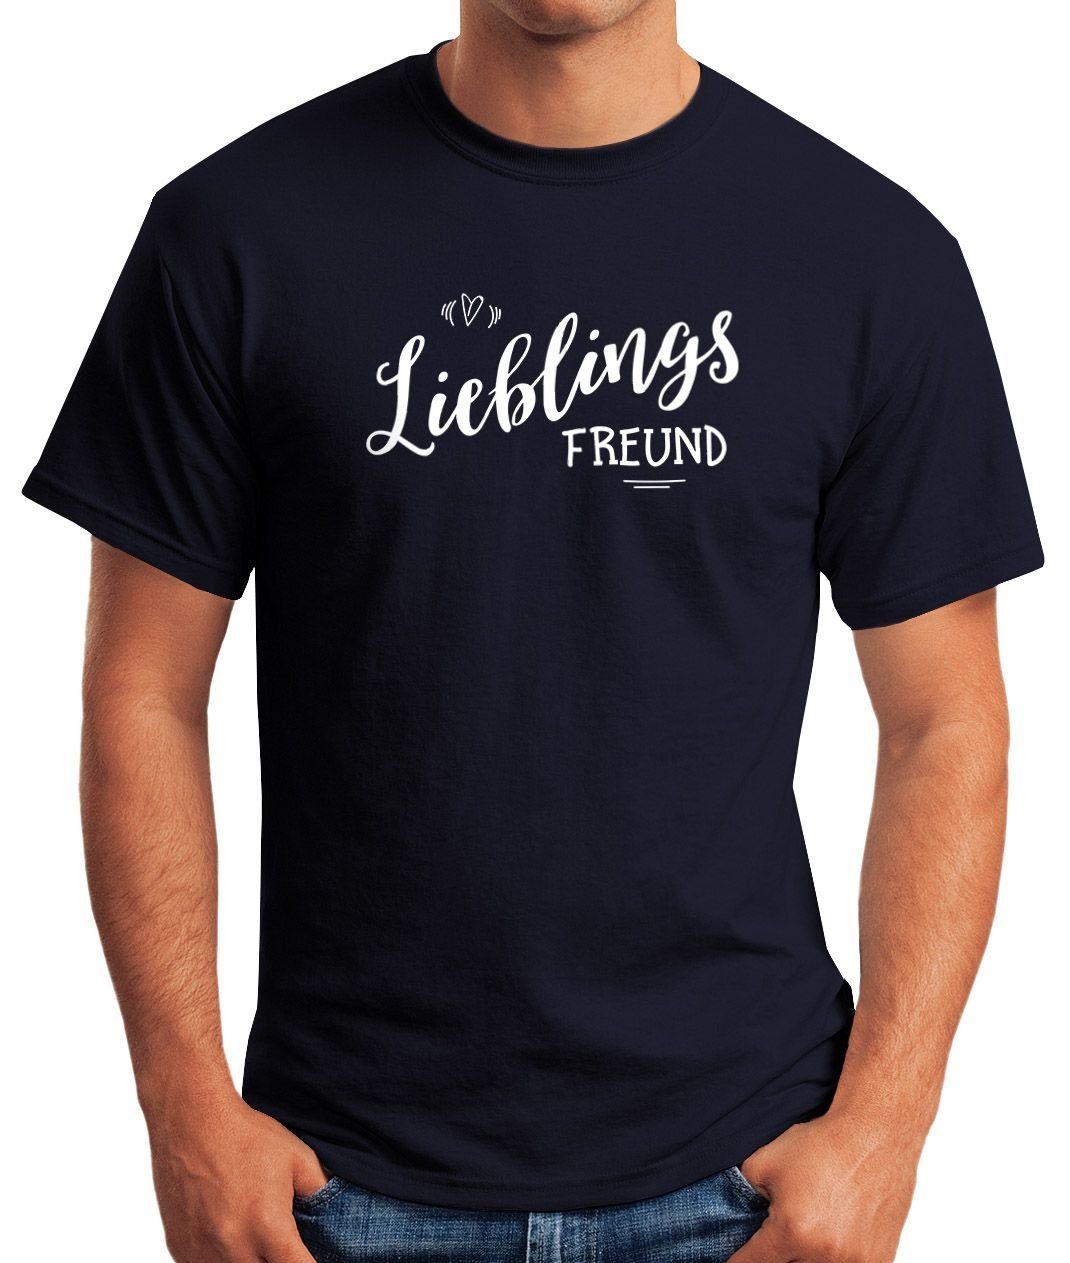 MoonWorks Print-Shirt Herren T-Shirt Lieblingsfreund Print Partner mit Freundschaft Freund Liebe Moonworks® navy Geschenk